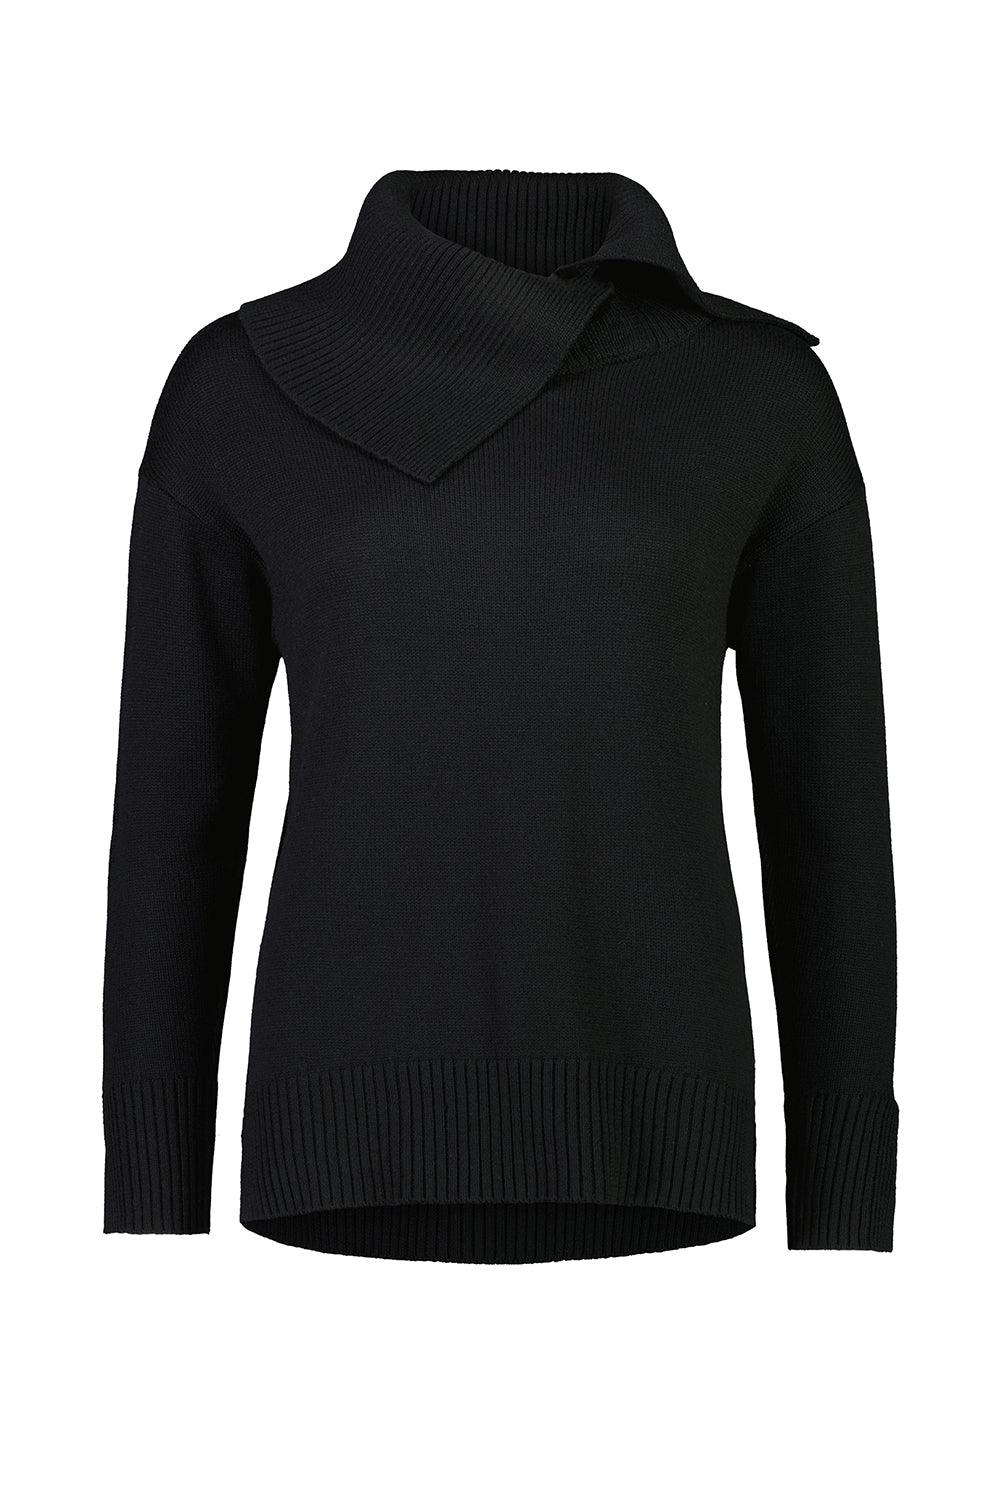 Oasis Sweater - Black - Sweater VERGE